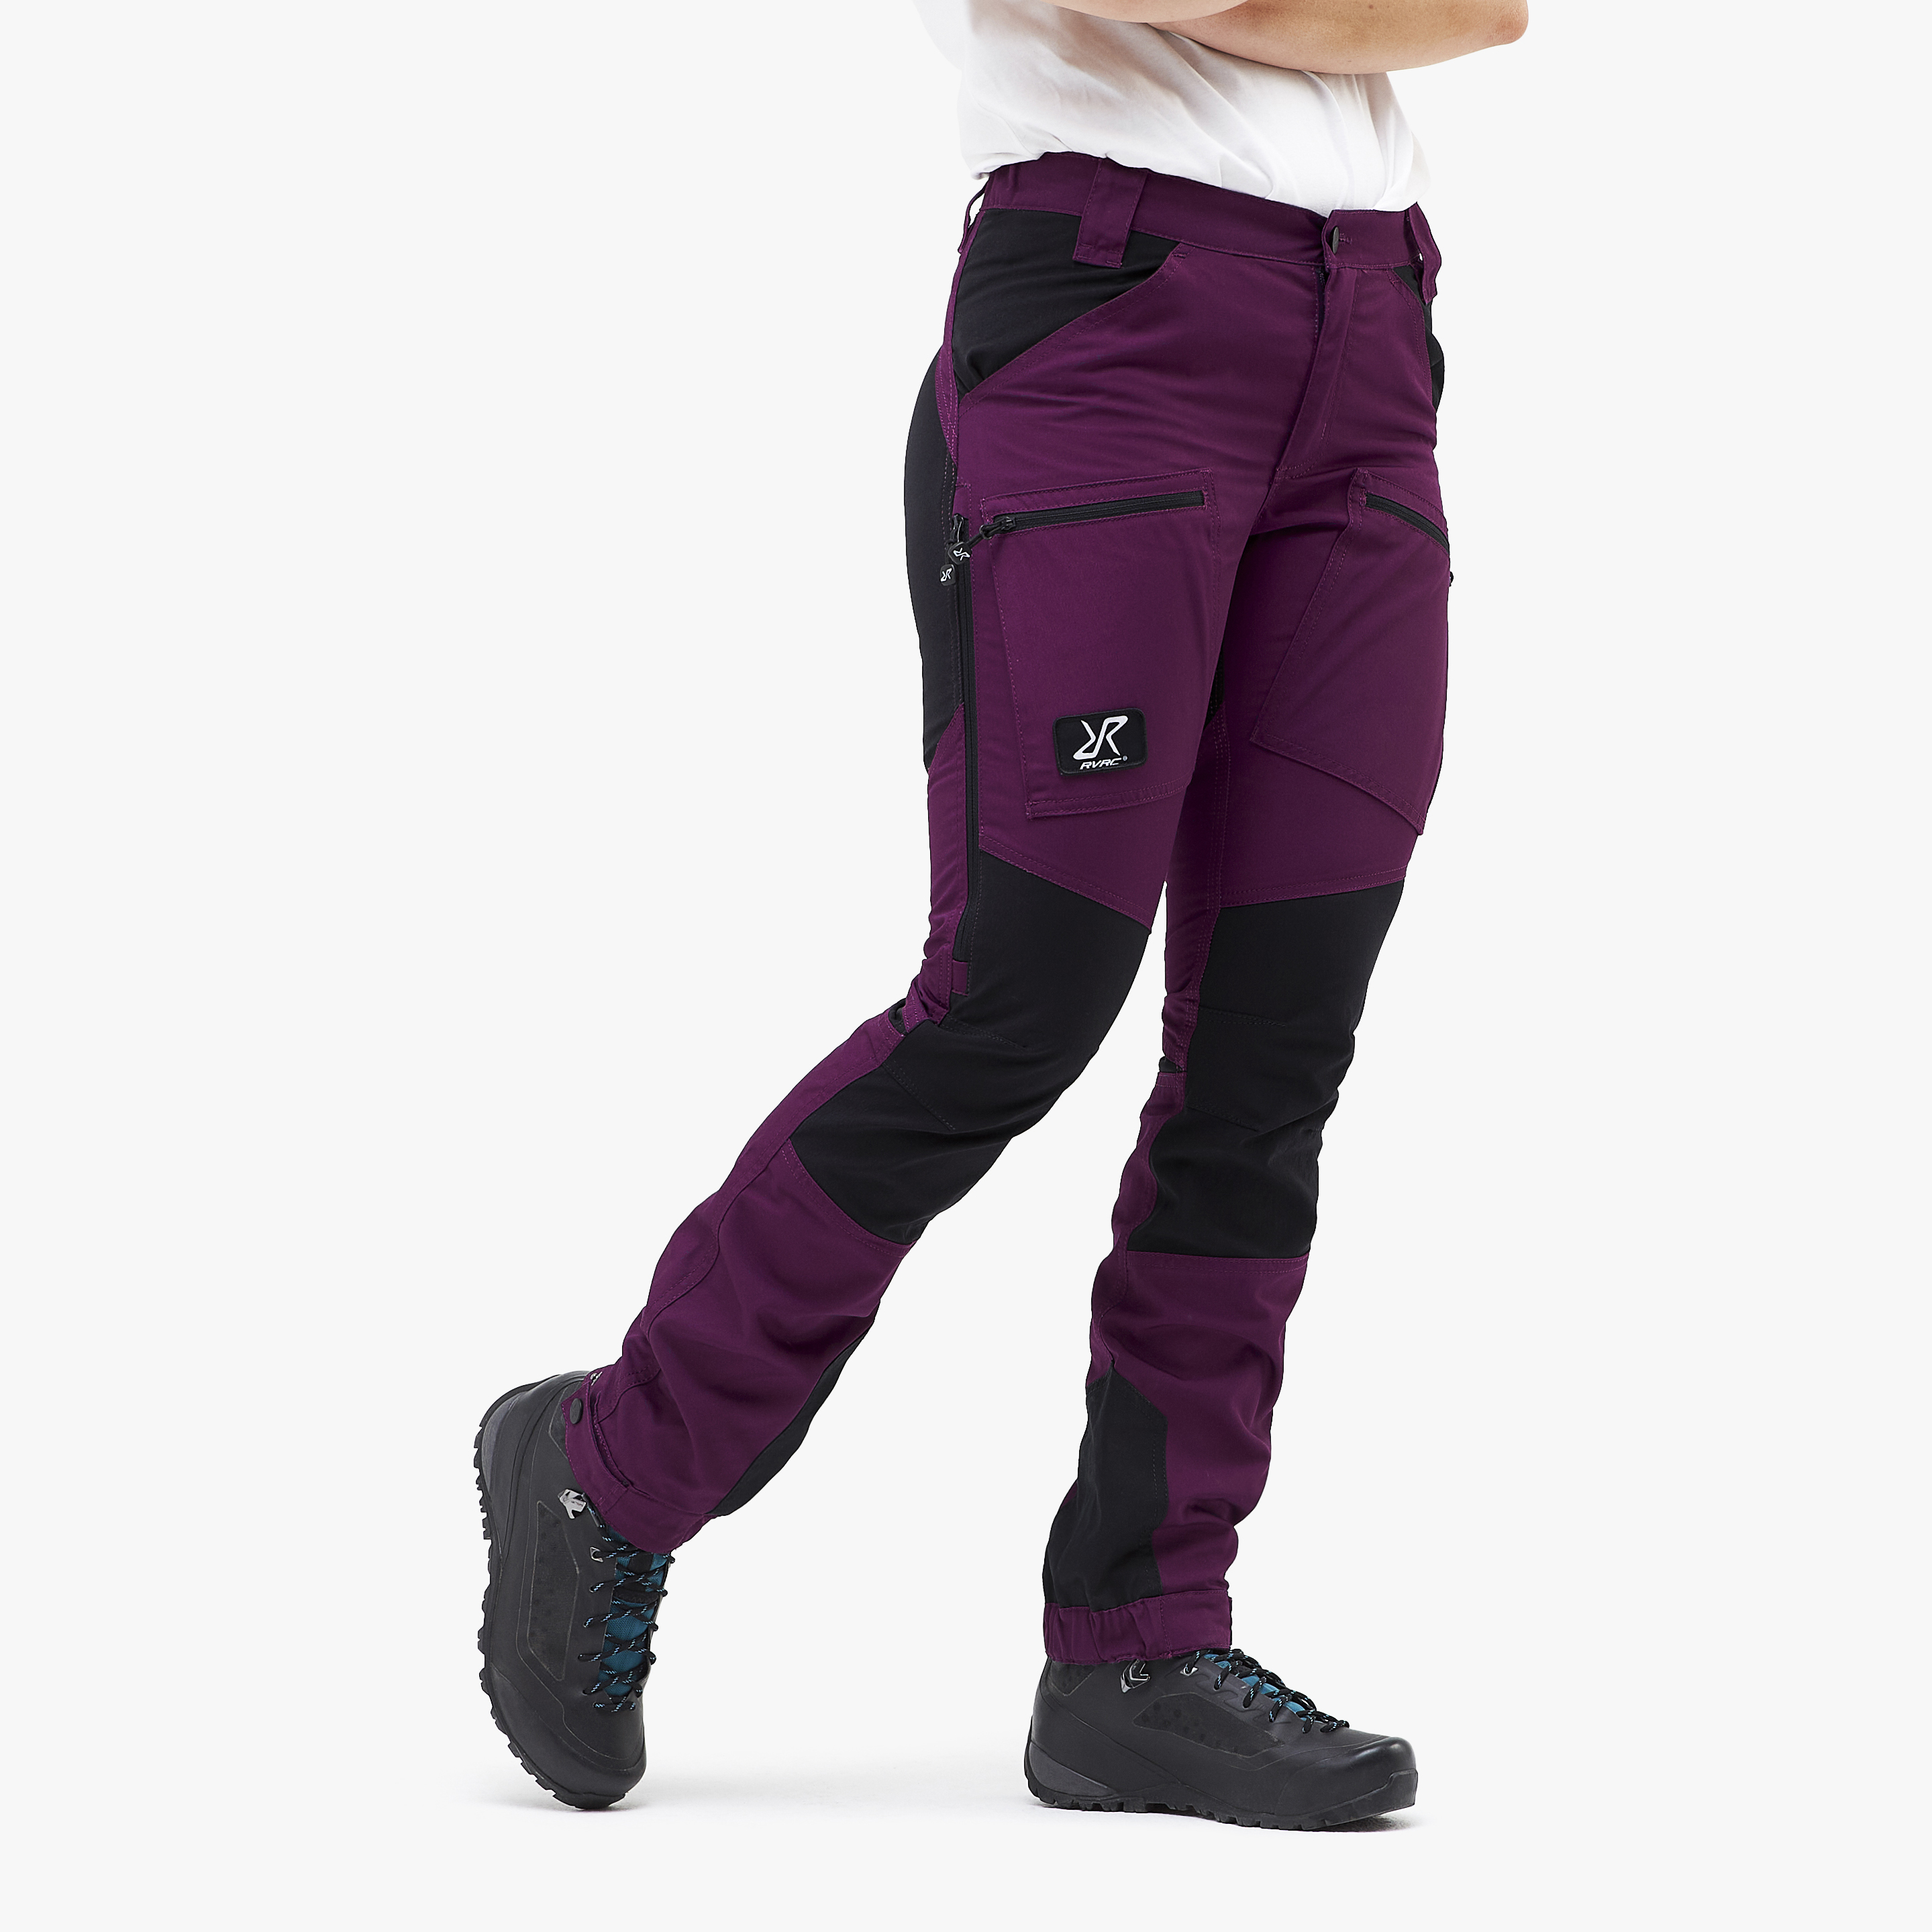 Nordwand Pro Short Trousers Purple Rain Women